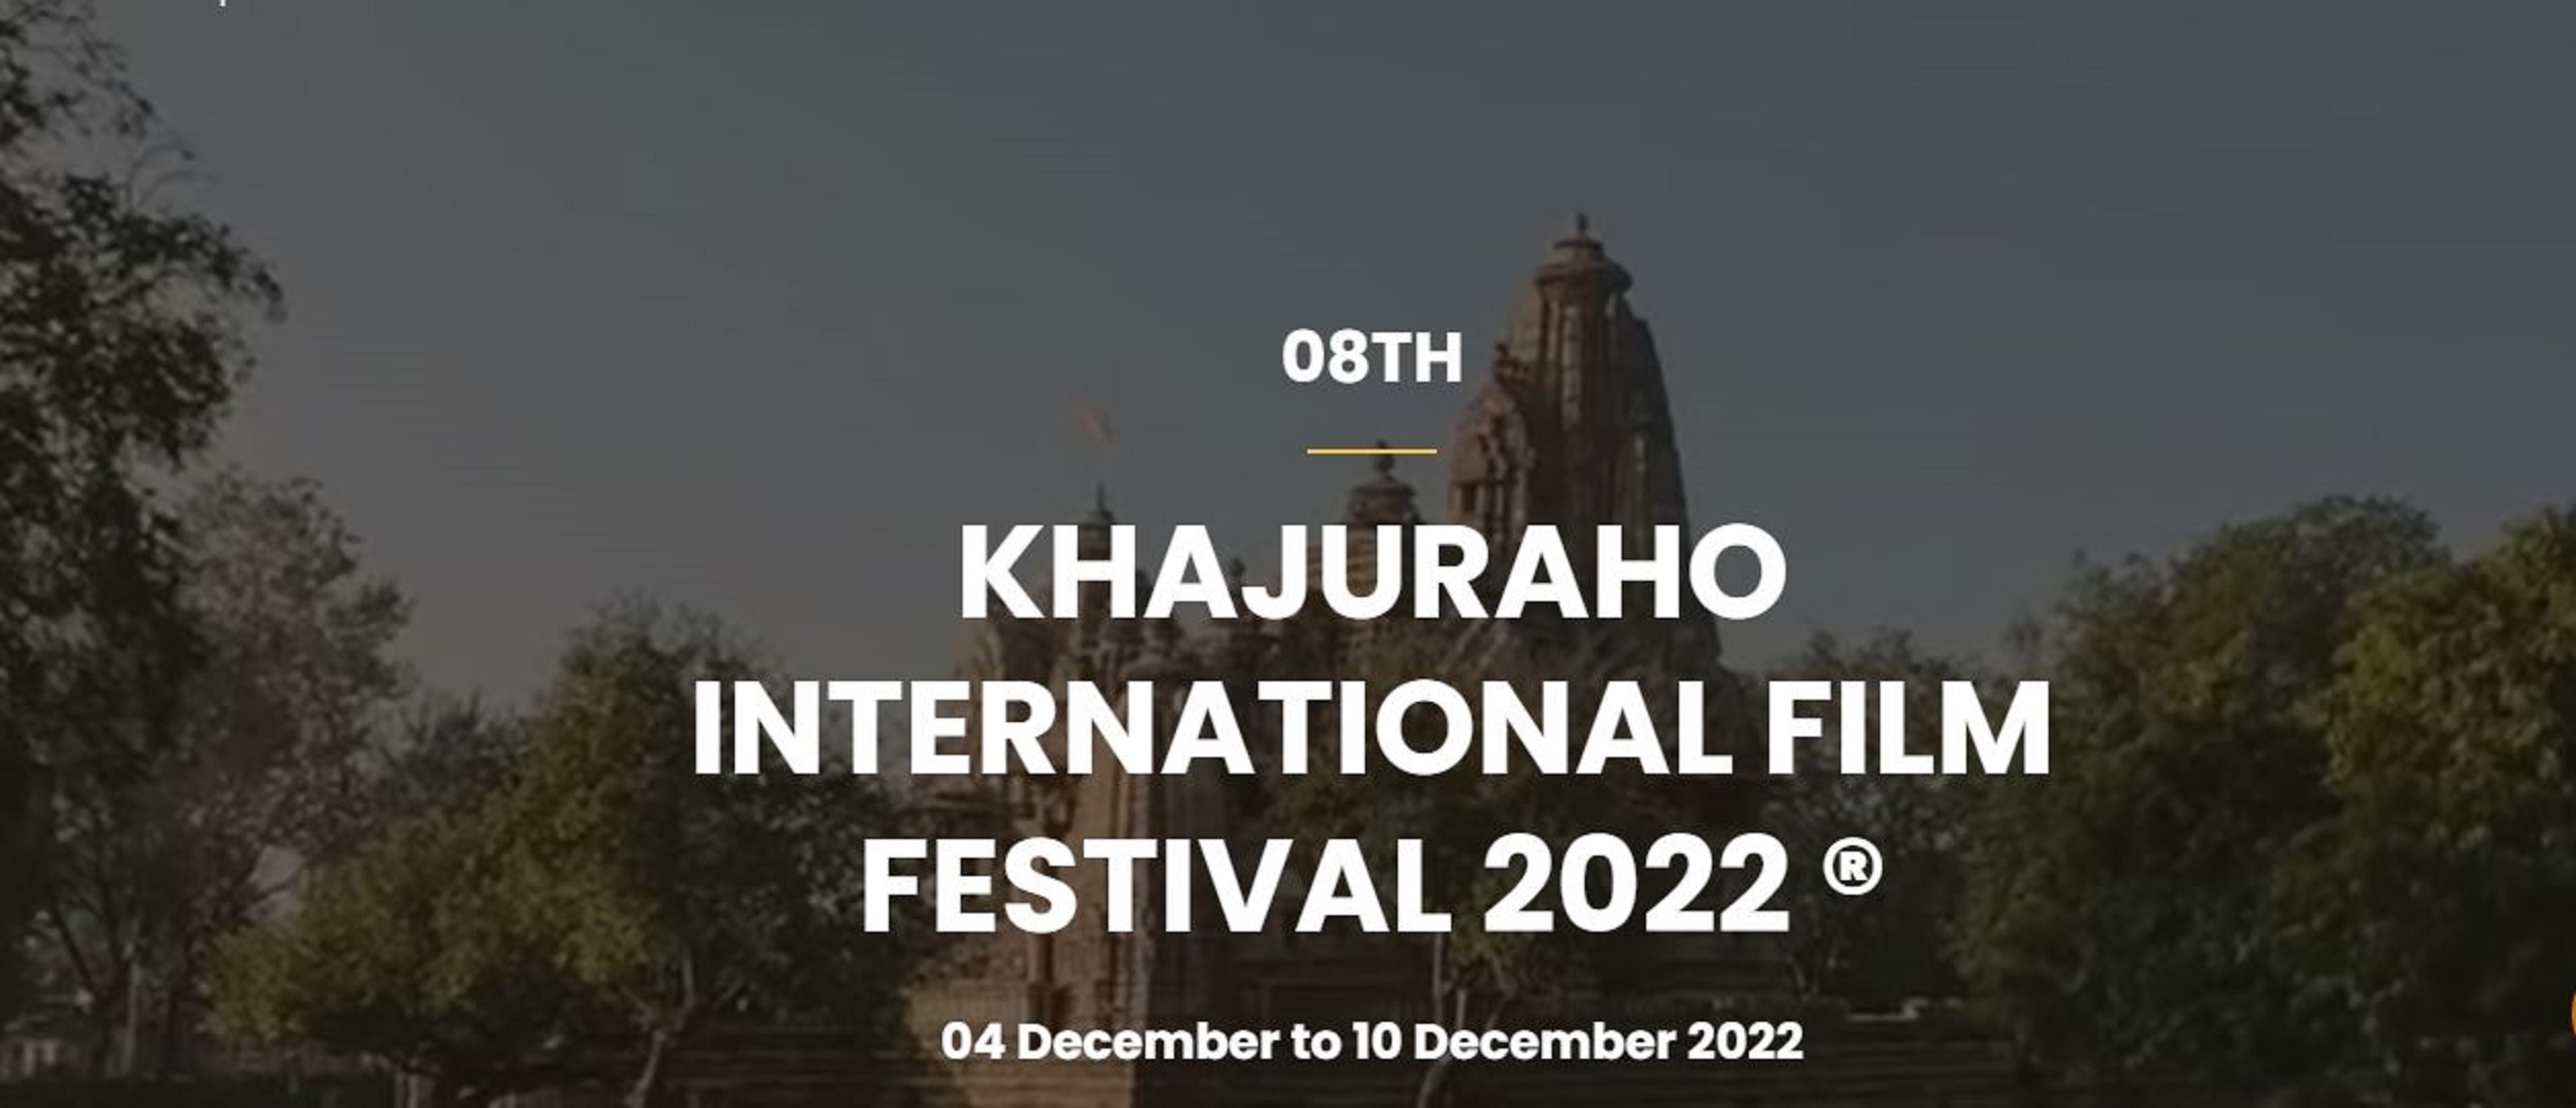 KHAJURAHO INTERNATIONAL FILM FESTIVAL